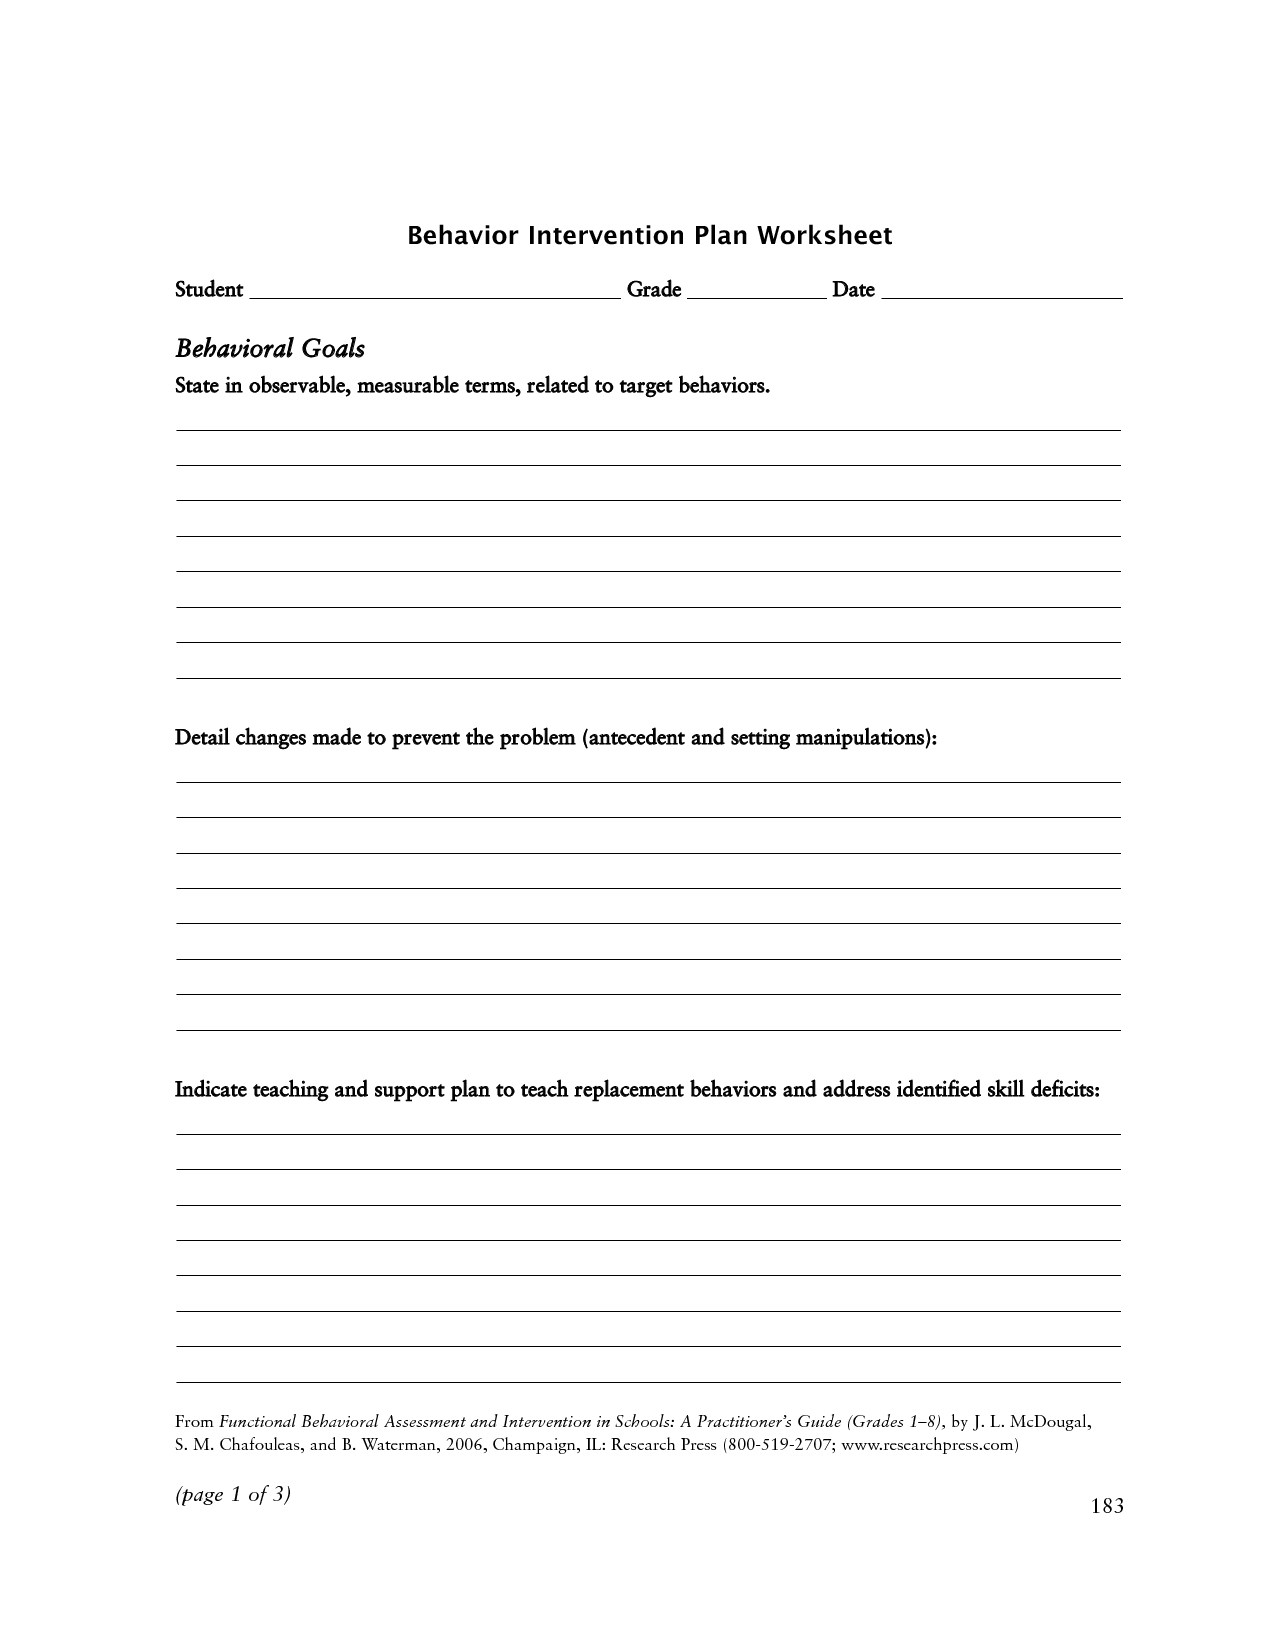 Behavior Intervention Plan Worksheet Image